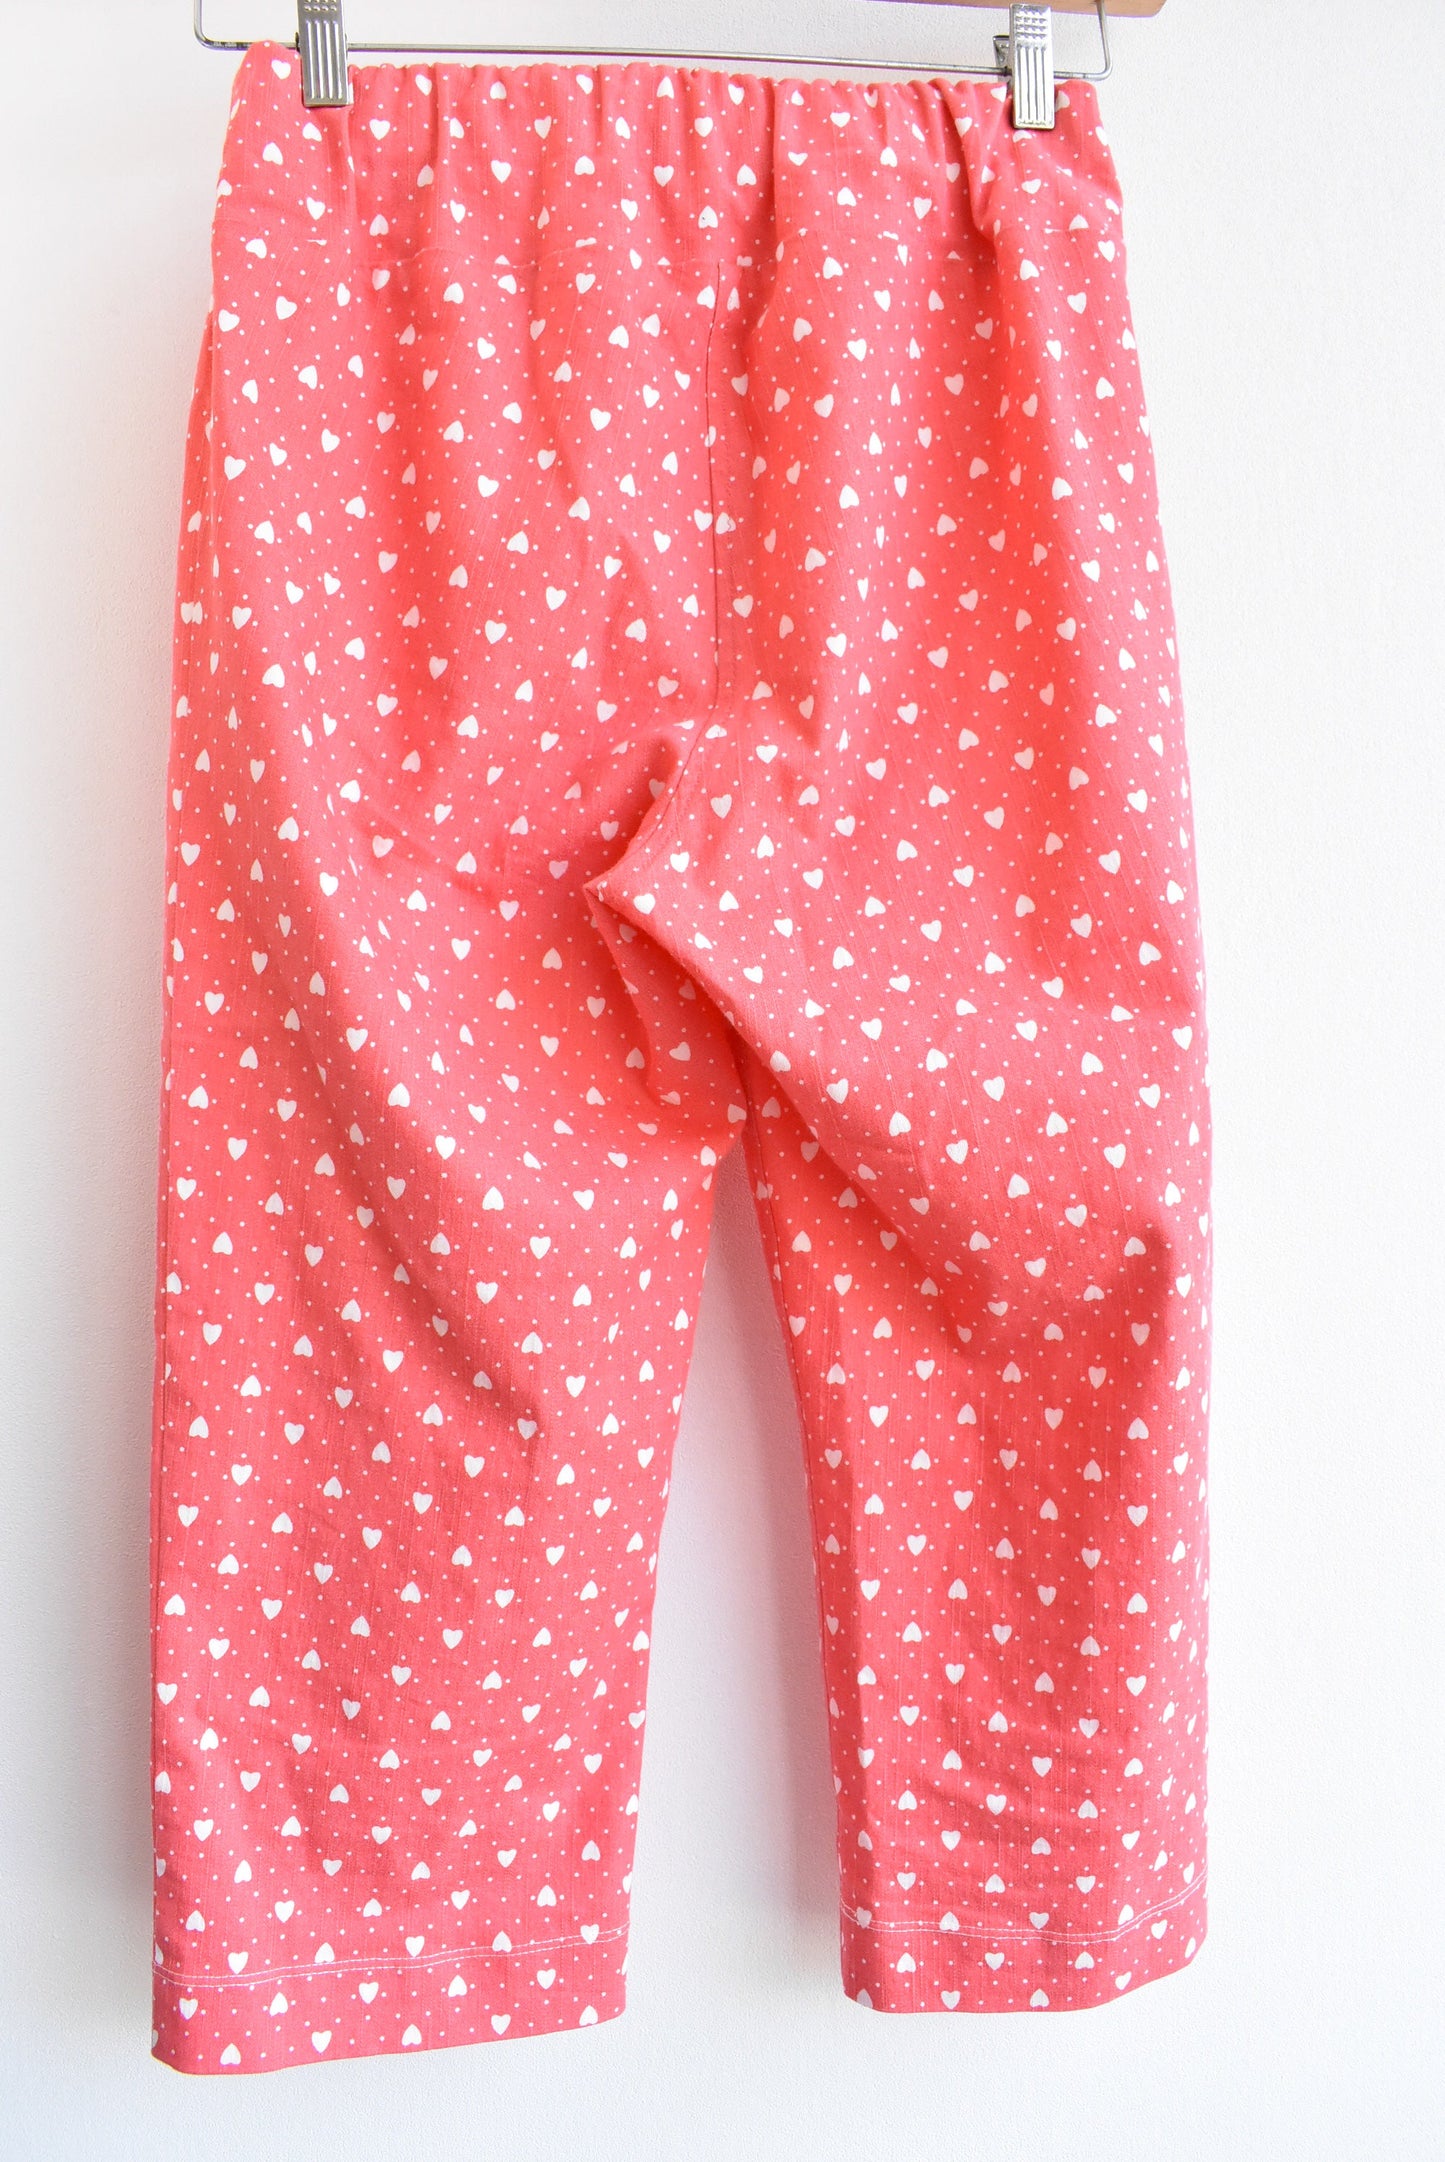 Pink heart-patterned short pants, M